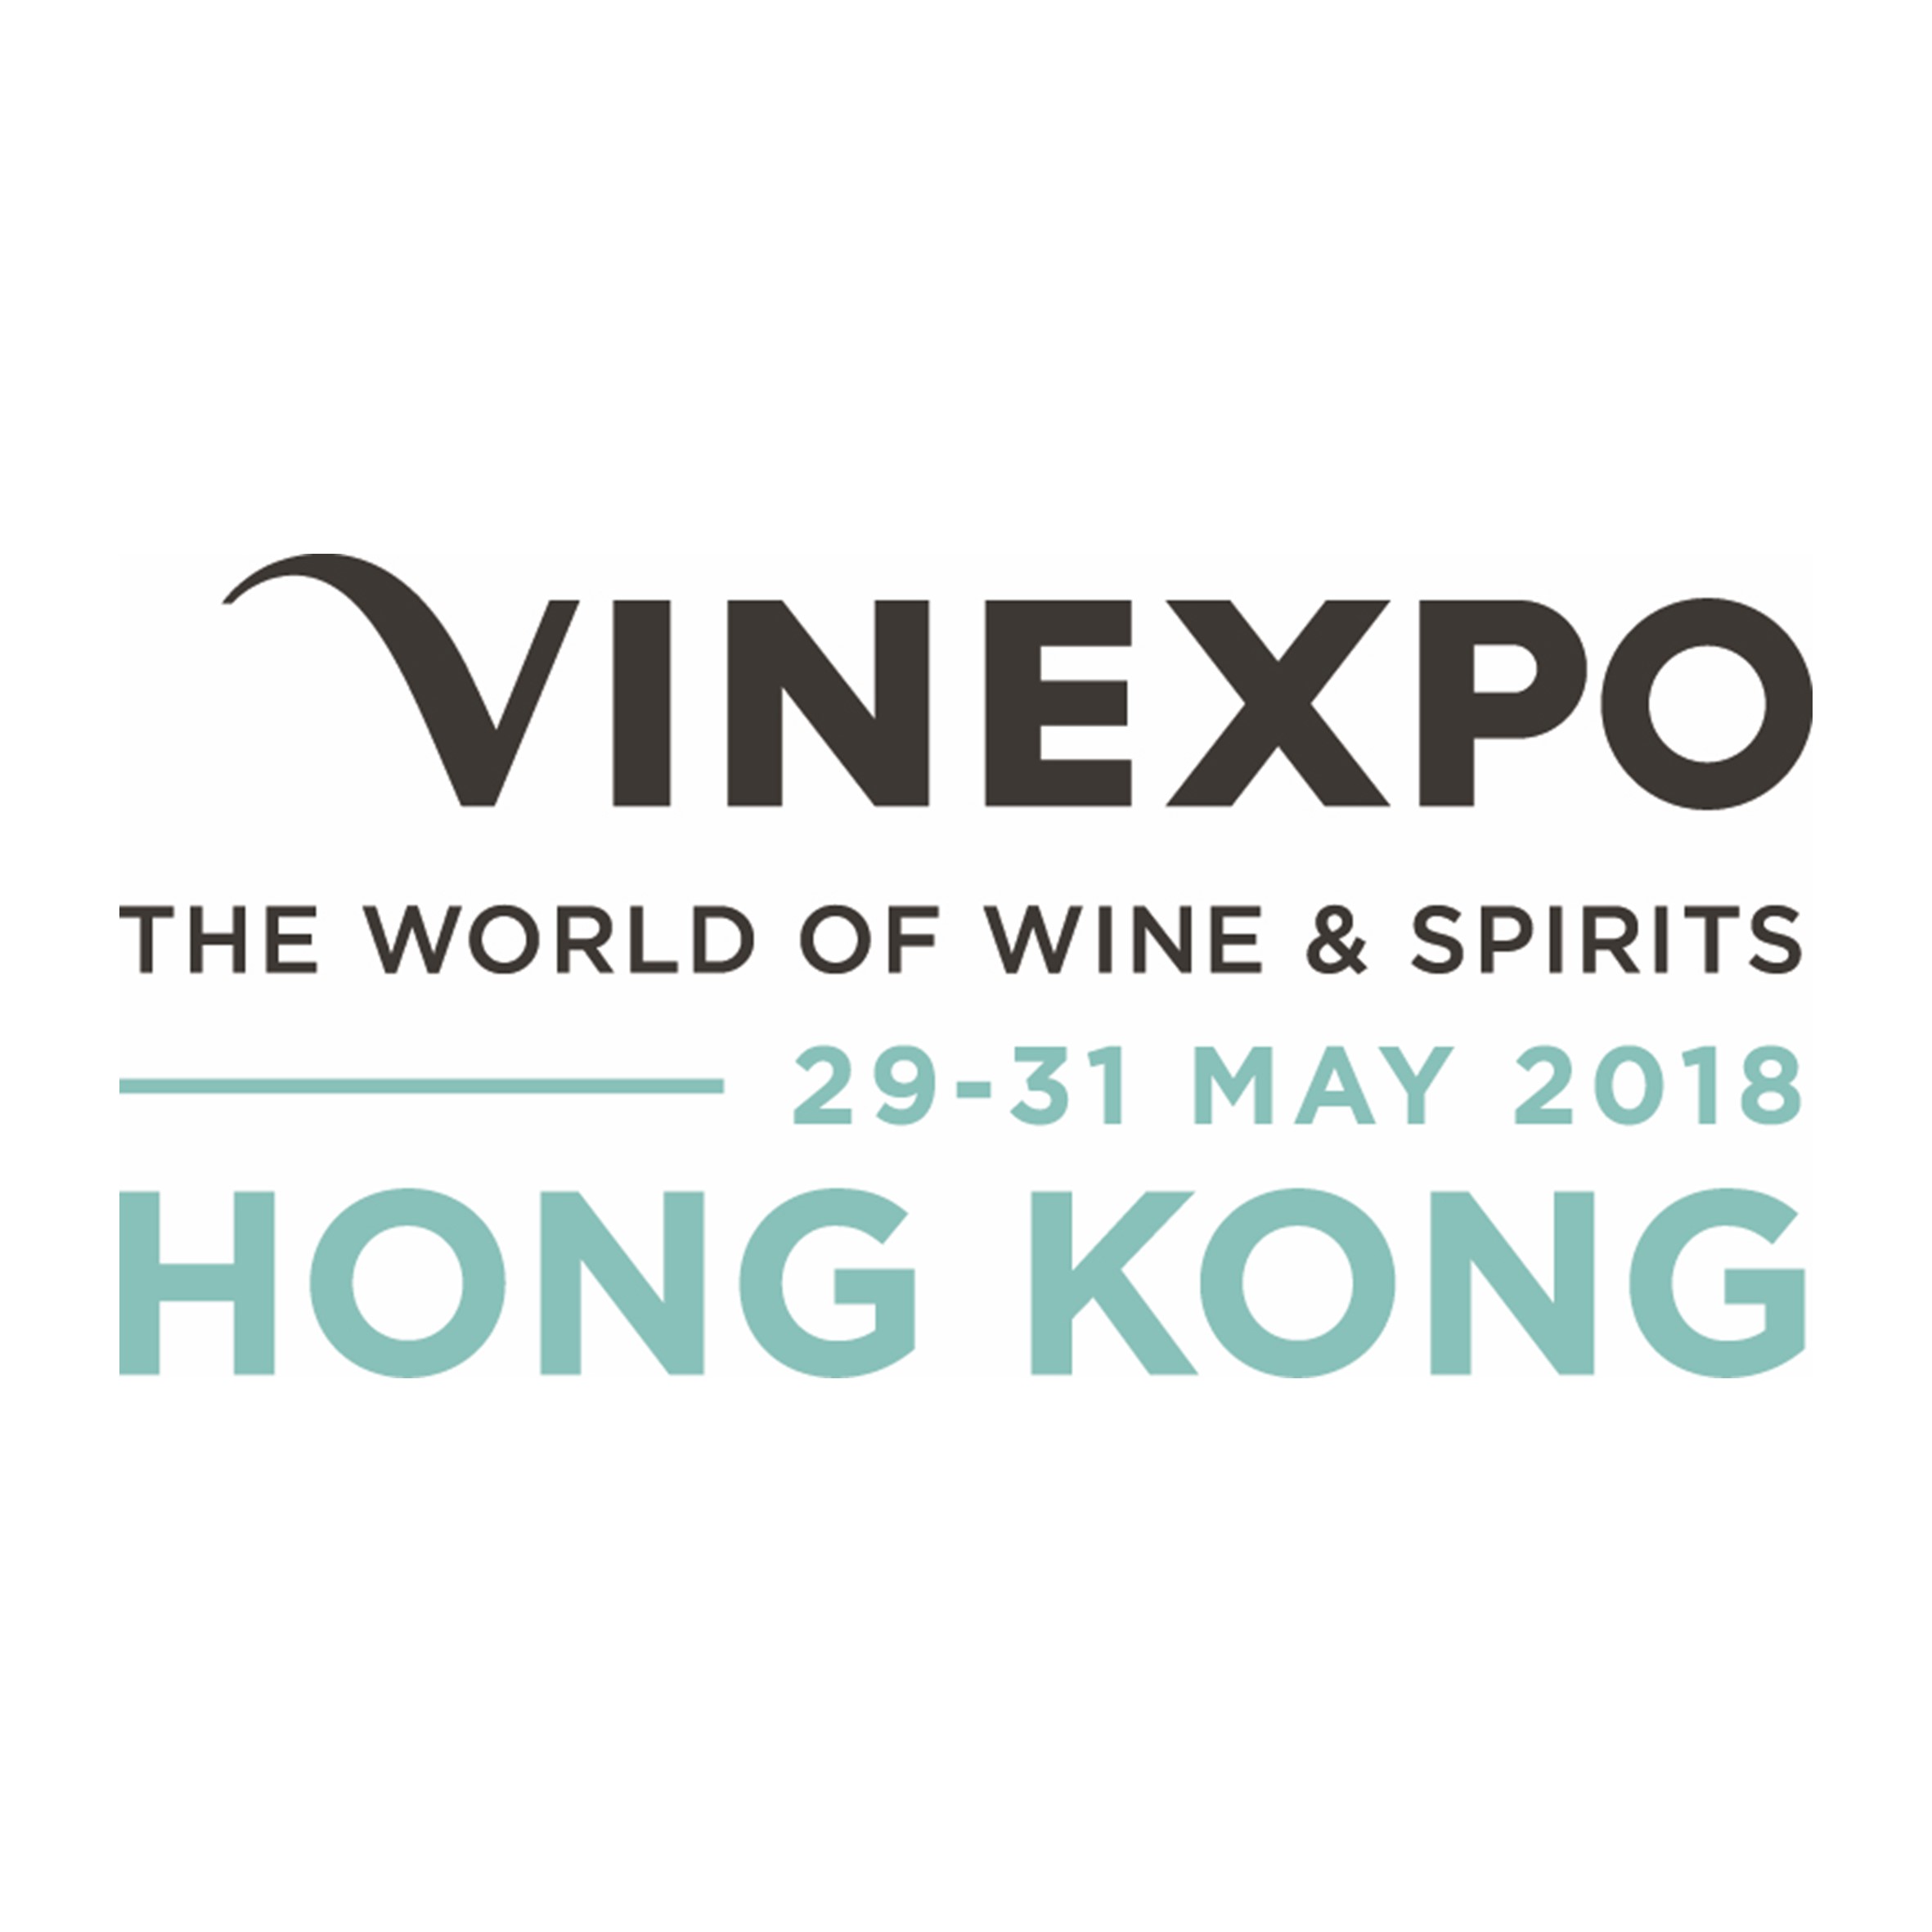 Vinexpo Hong Kong Logo 2018 - Signs of progress, more order needed